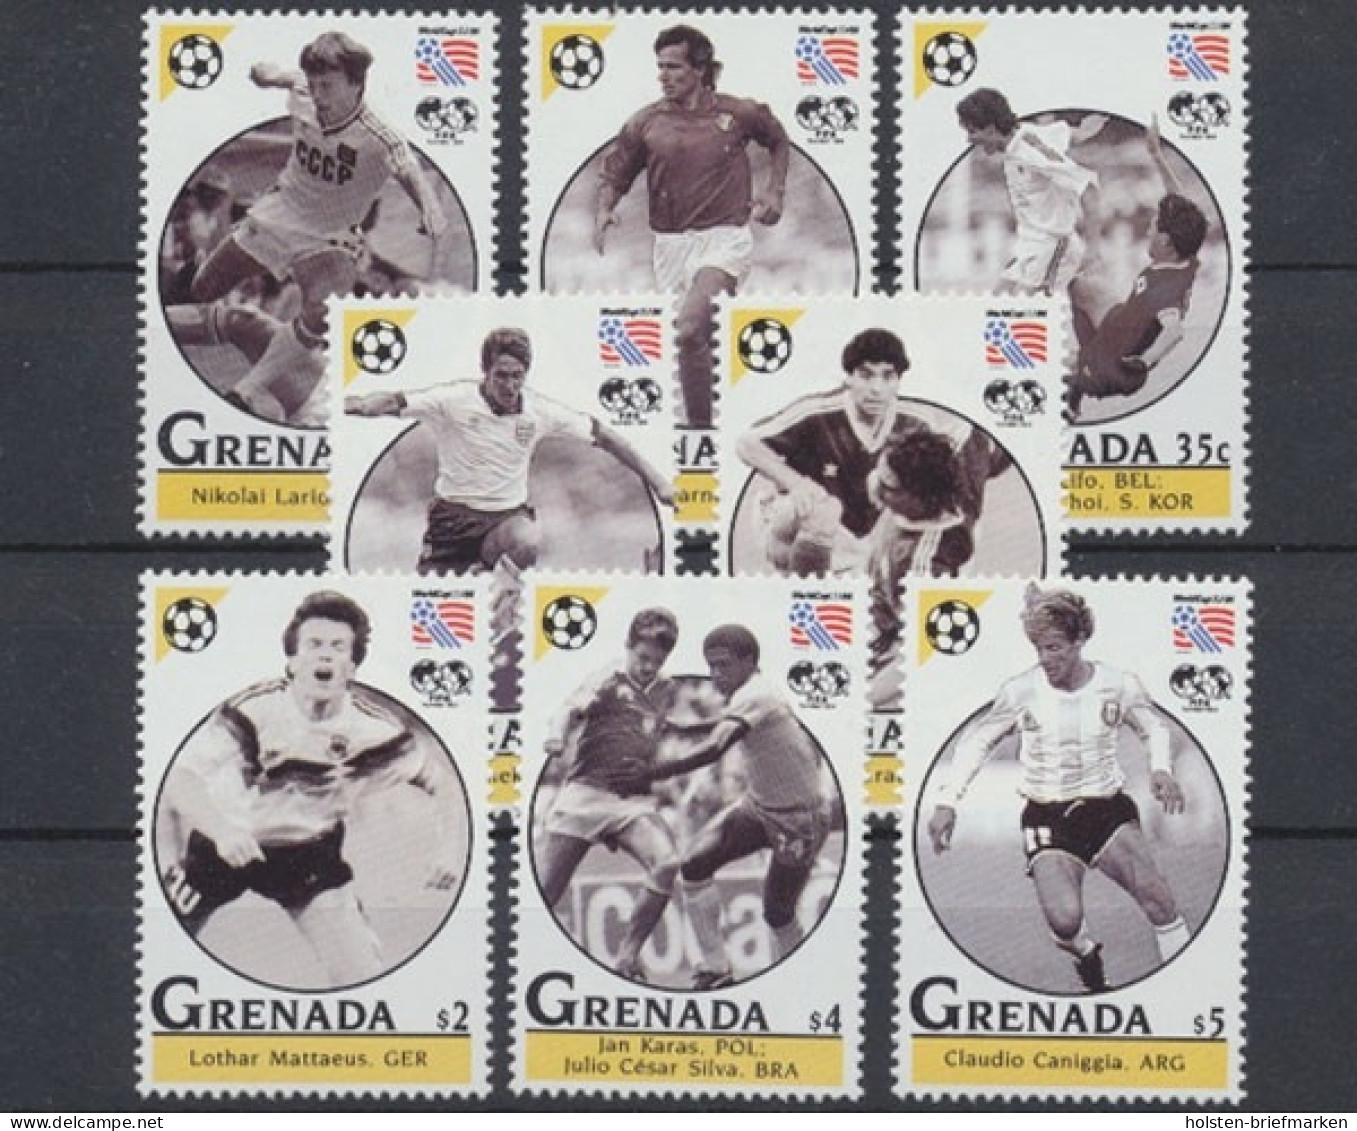 Grenada, MiNr. 2657-2664, Postfrisch - Grenade (1974-...)